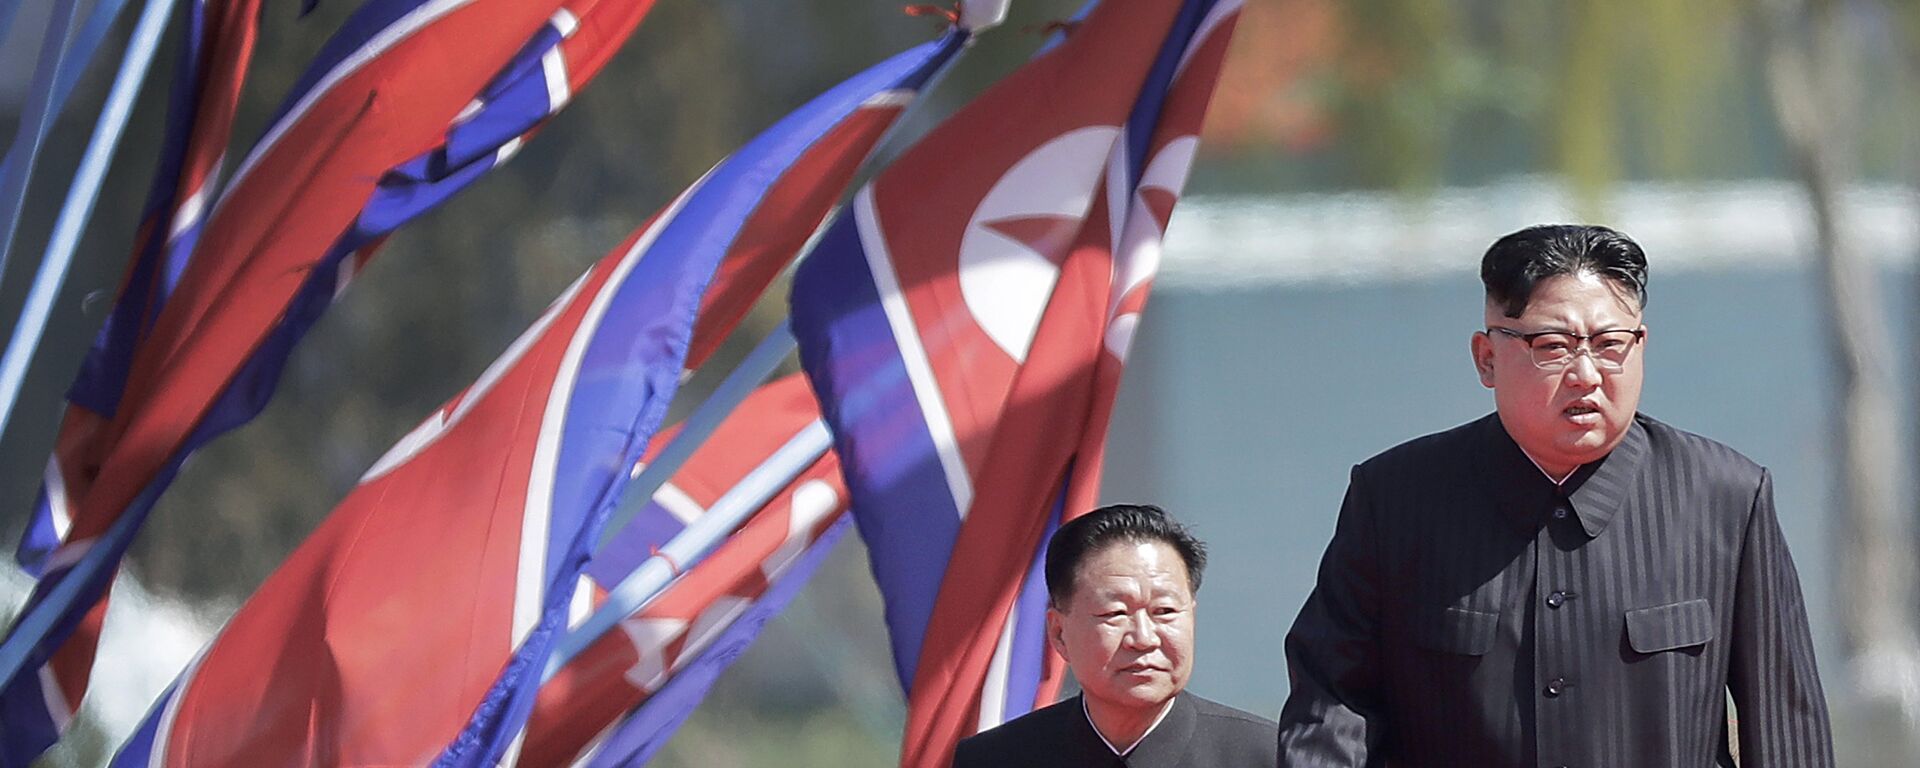 Kim Jong-un, líder de Corea del Norte - Sputnik Mundo, 1920, 29.09.2021